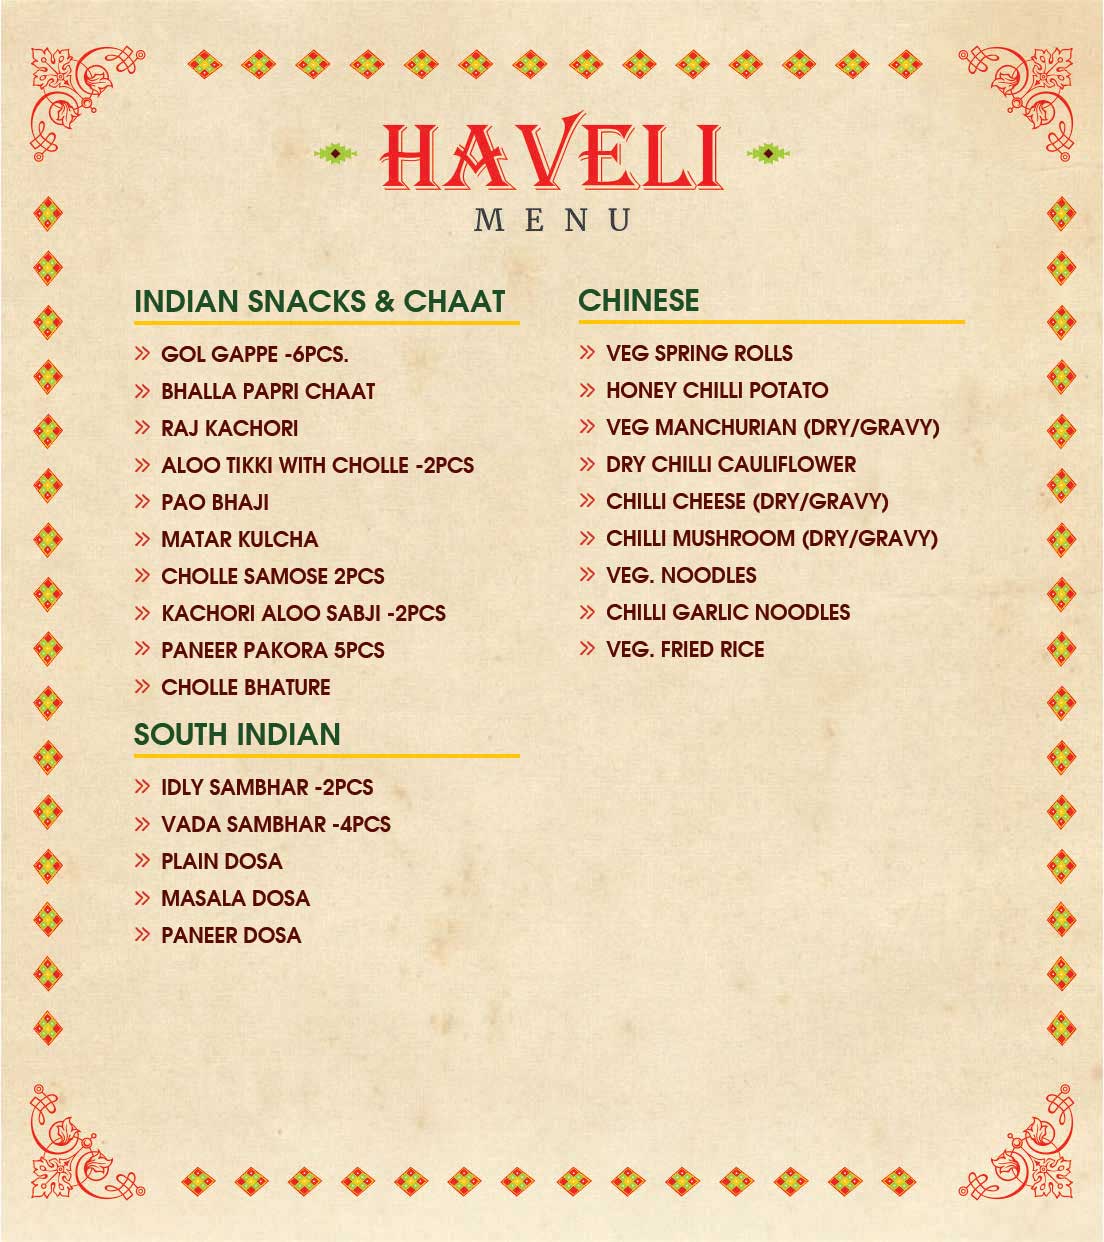 Murthal Dhaba menu